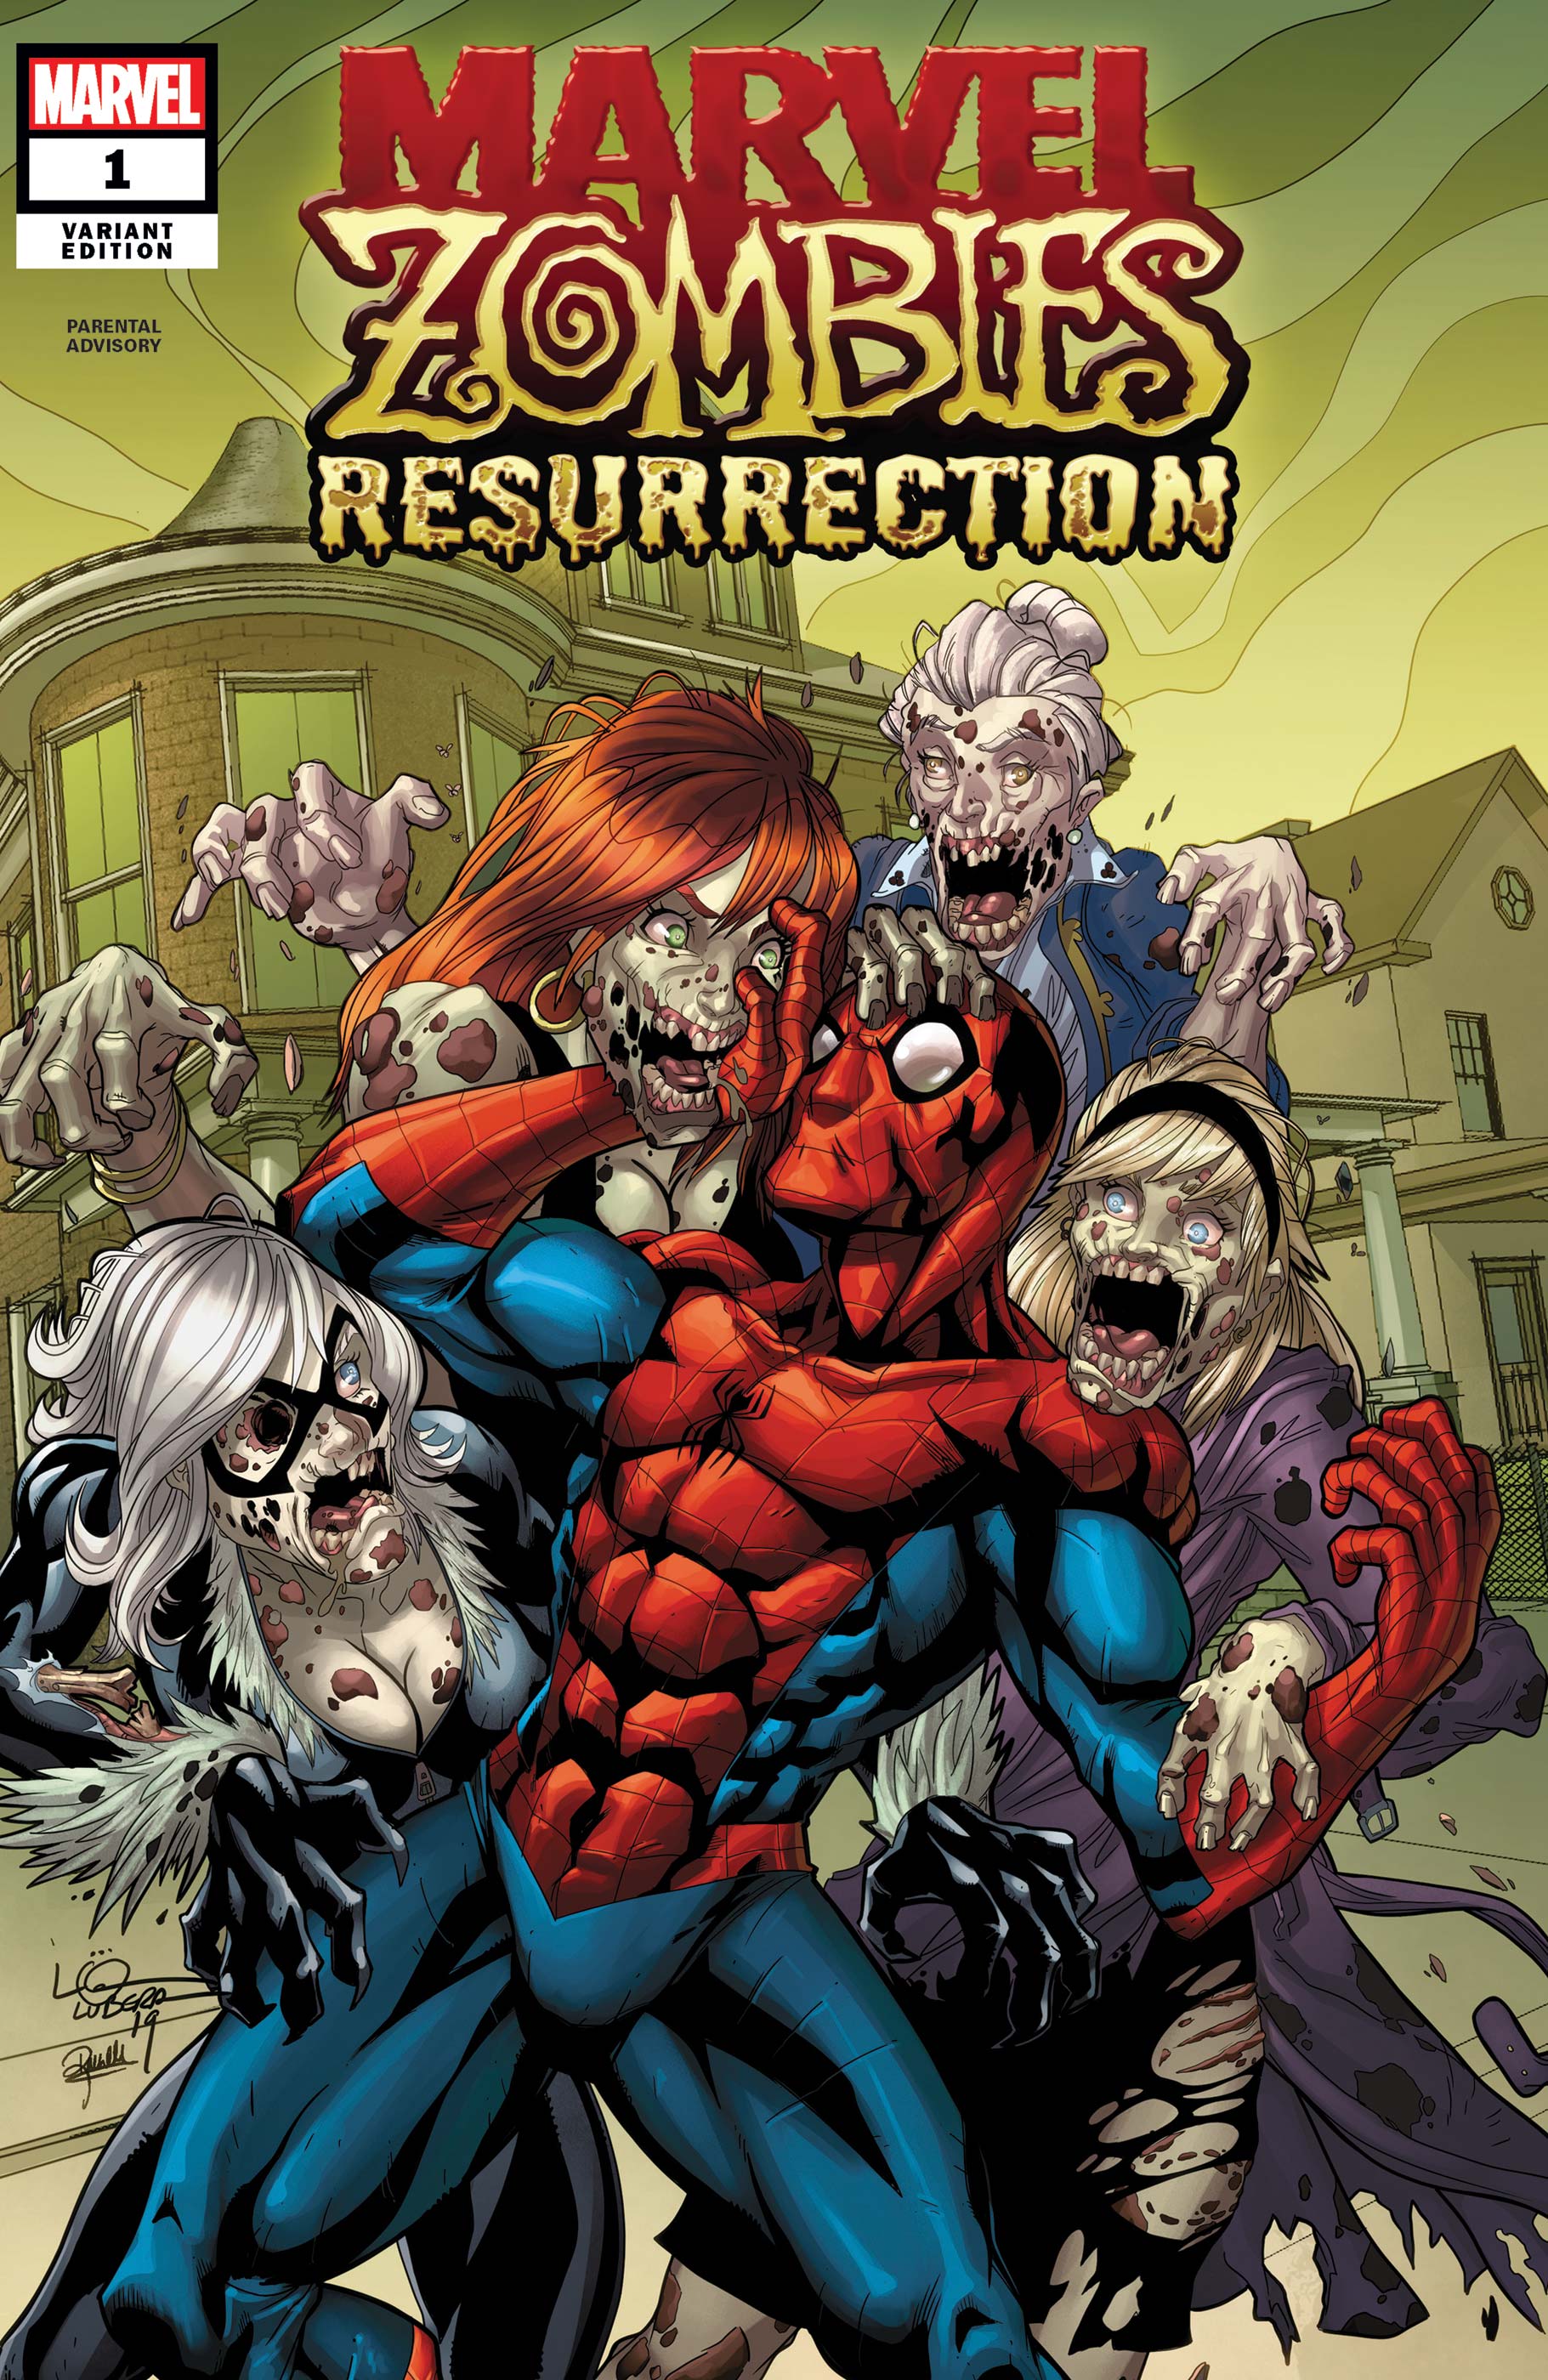 Marvel Zombies: Resurrection (2020) #1 (Variant)